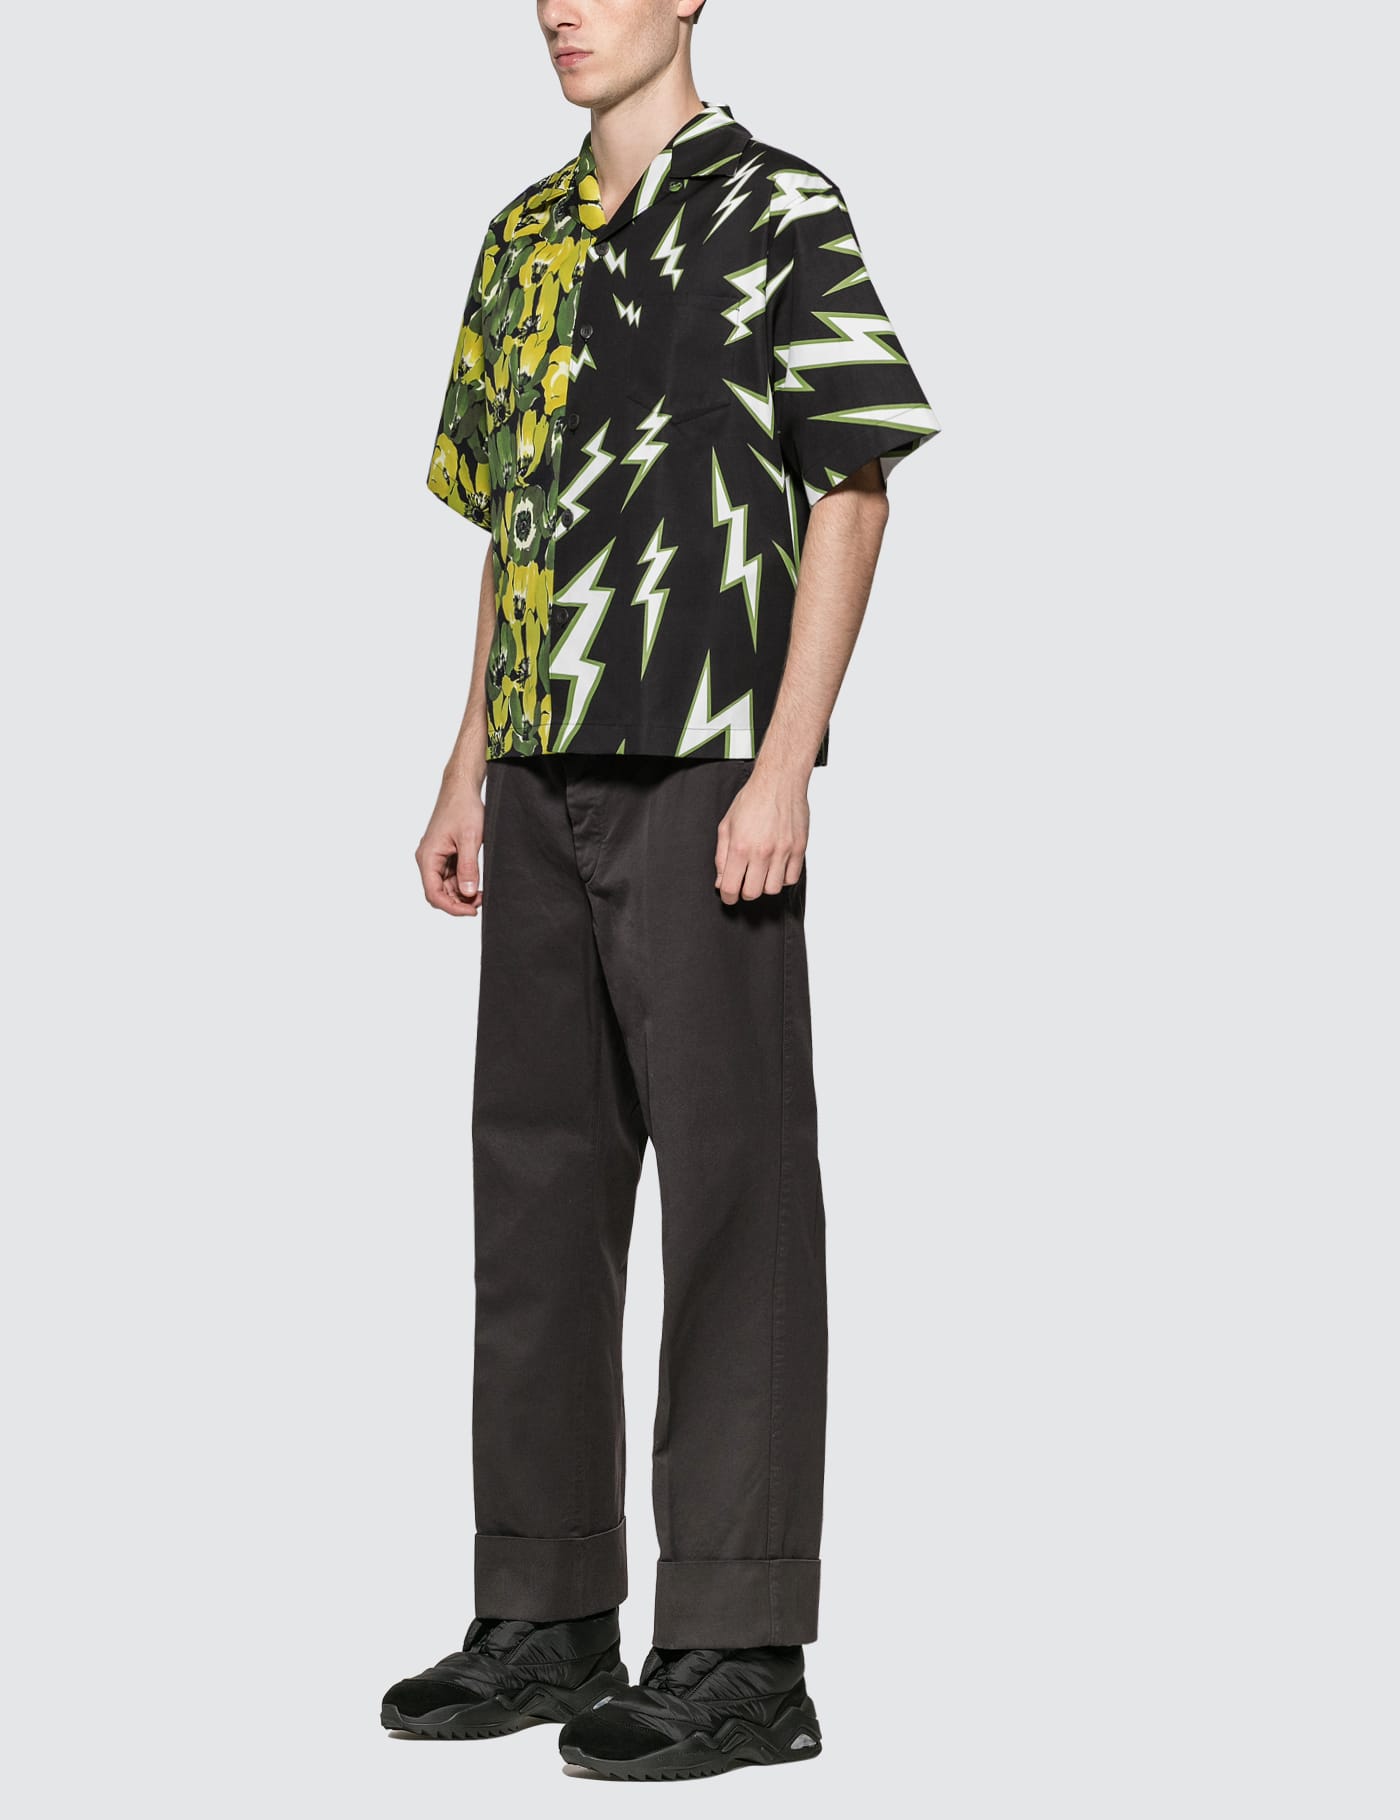 Prada - Printed Poplin Shirt | HBX - Globally Curated Fashion and Lifestyle  by Hypebeast